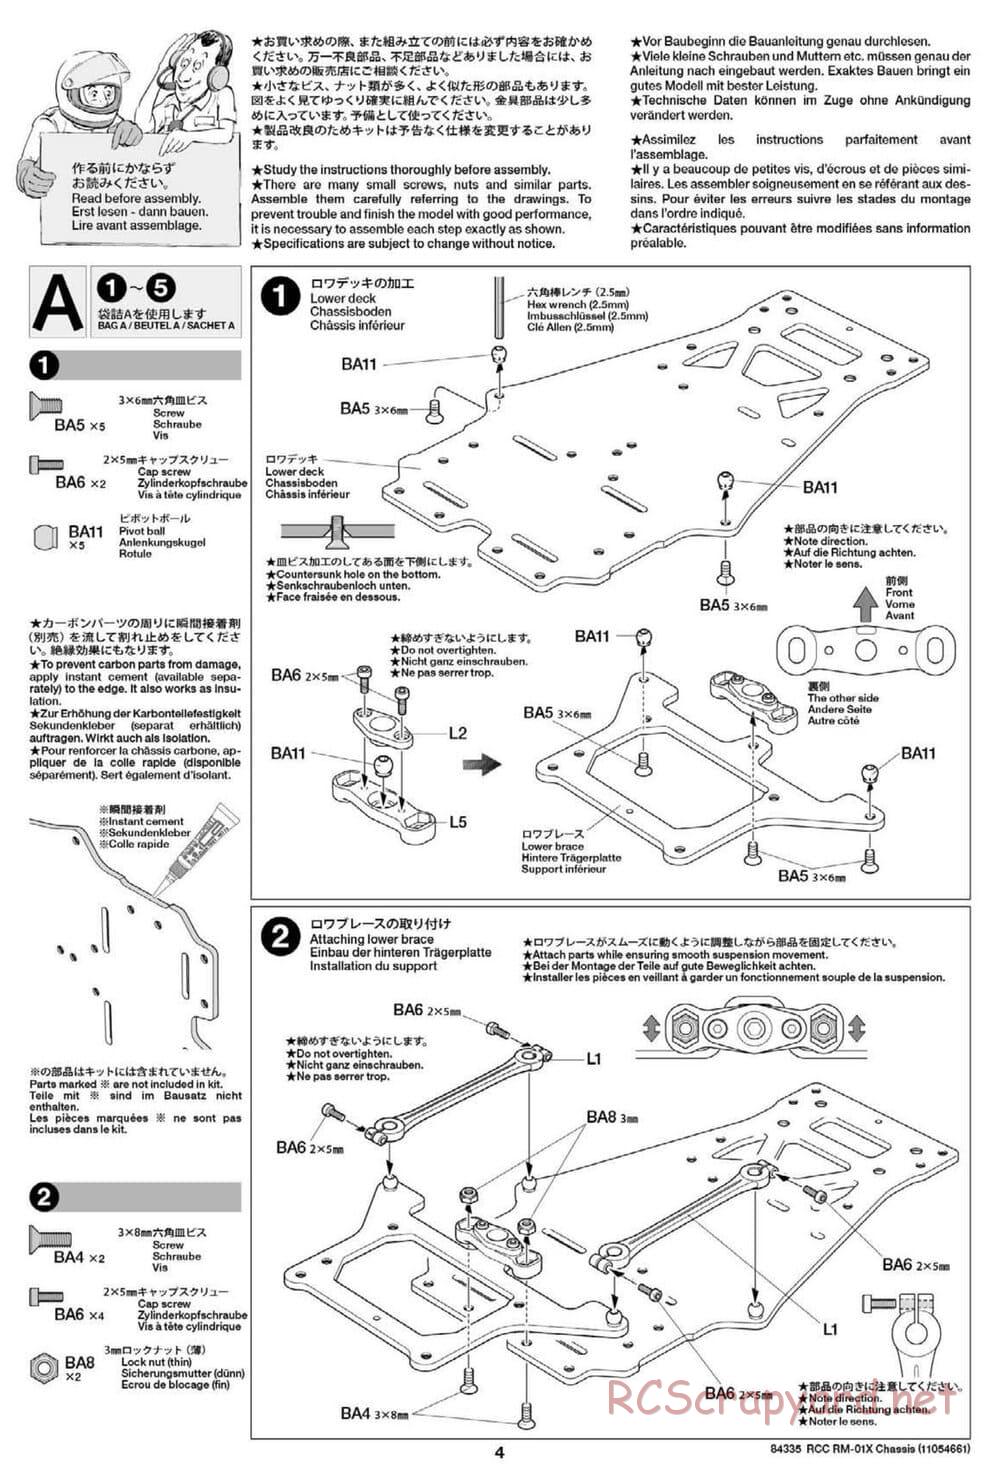 Tamiya - RM-01X Chassis - Manual - Page 4